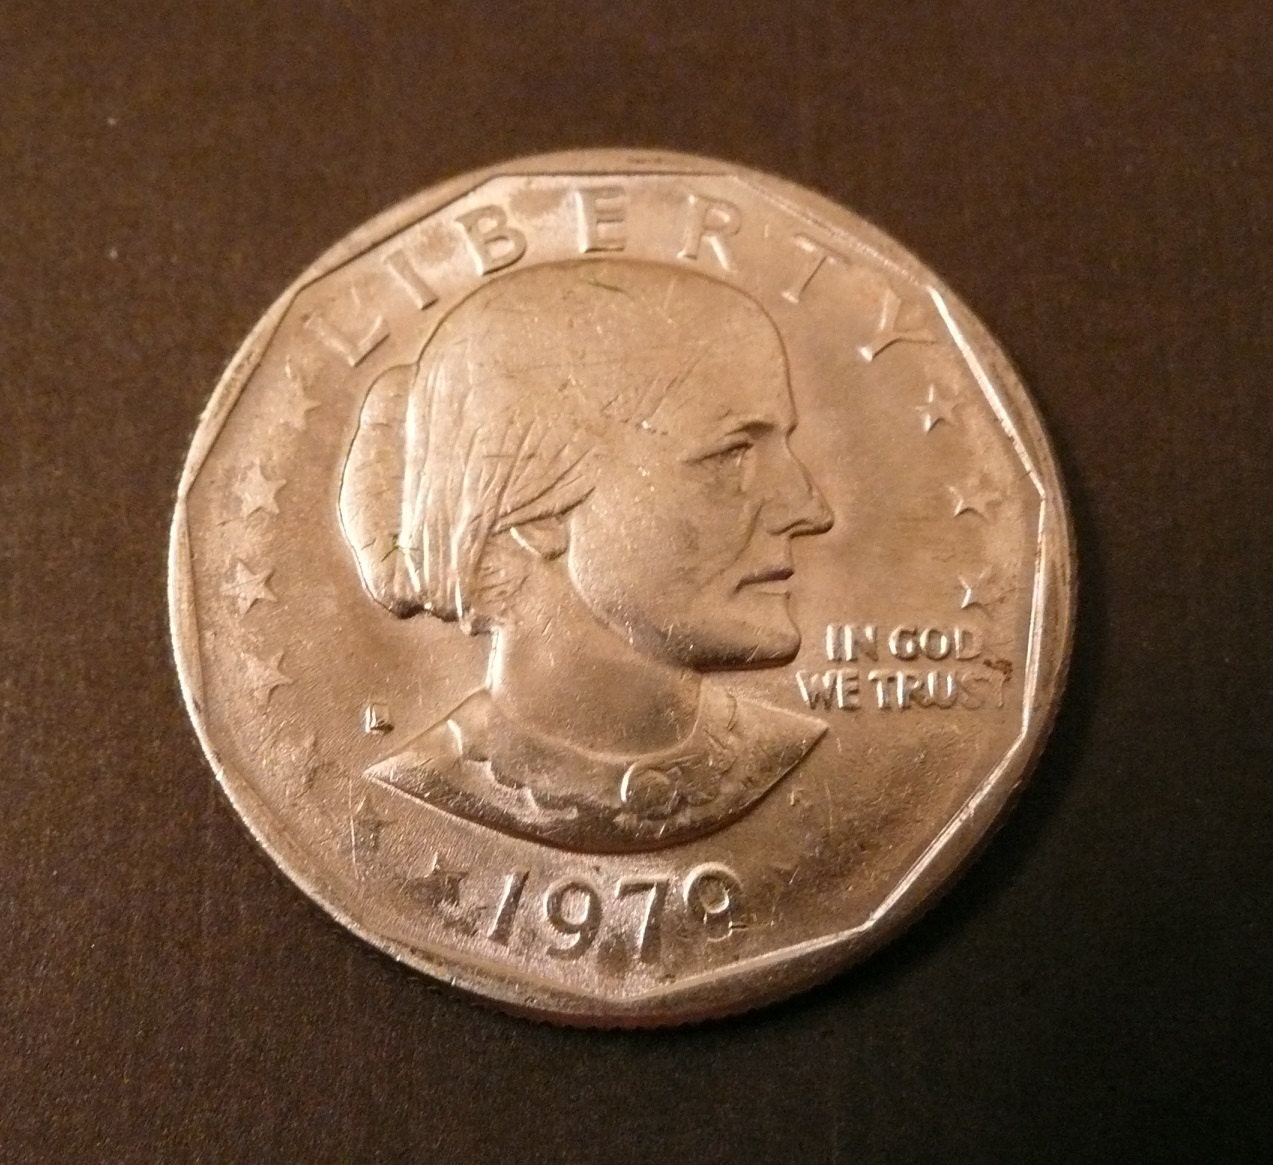 SBA Mint Error Coin 1979-S Susan B Anthony Dollar by AZCoinGuy1273 x 1165